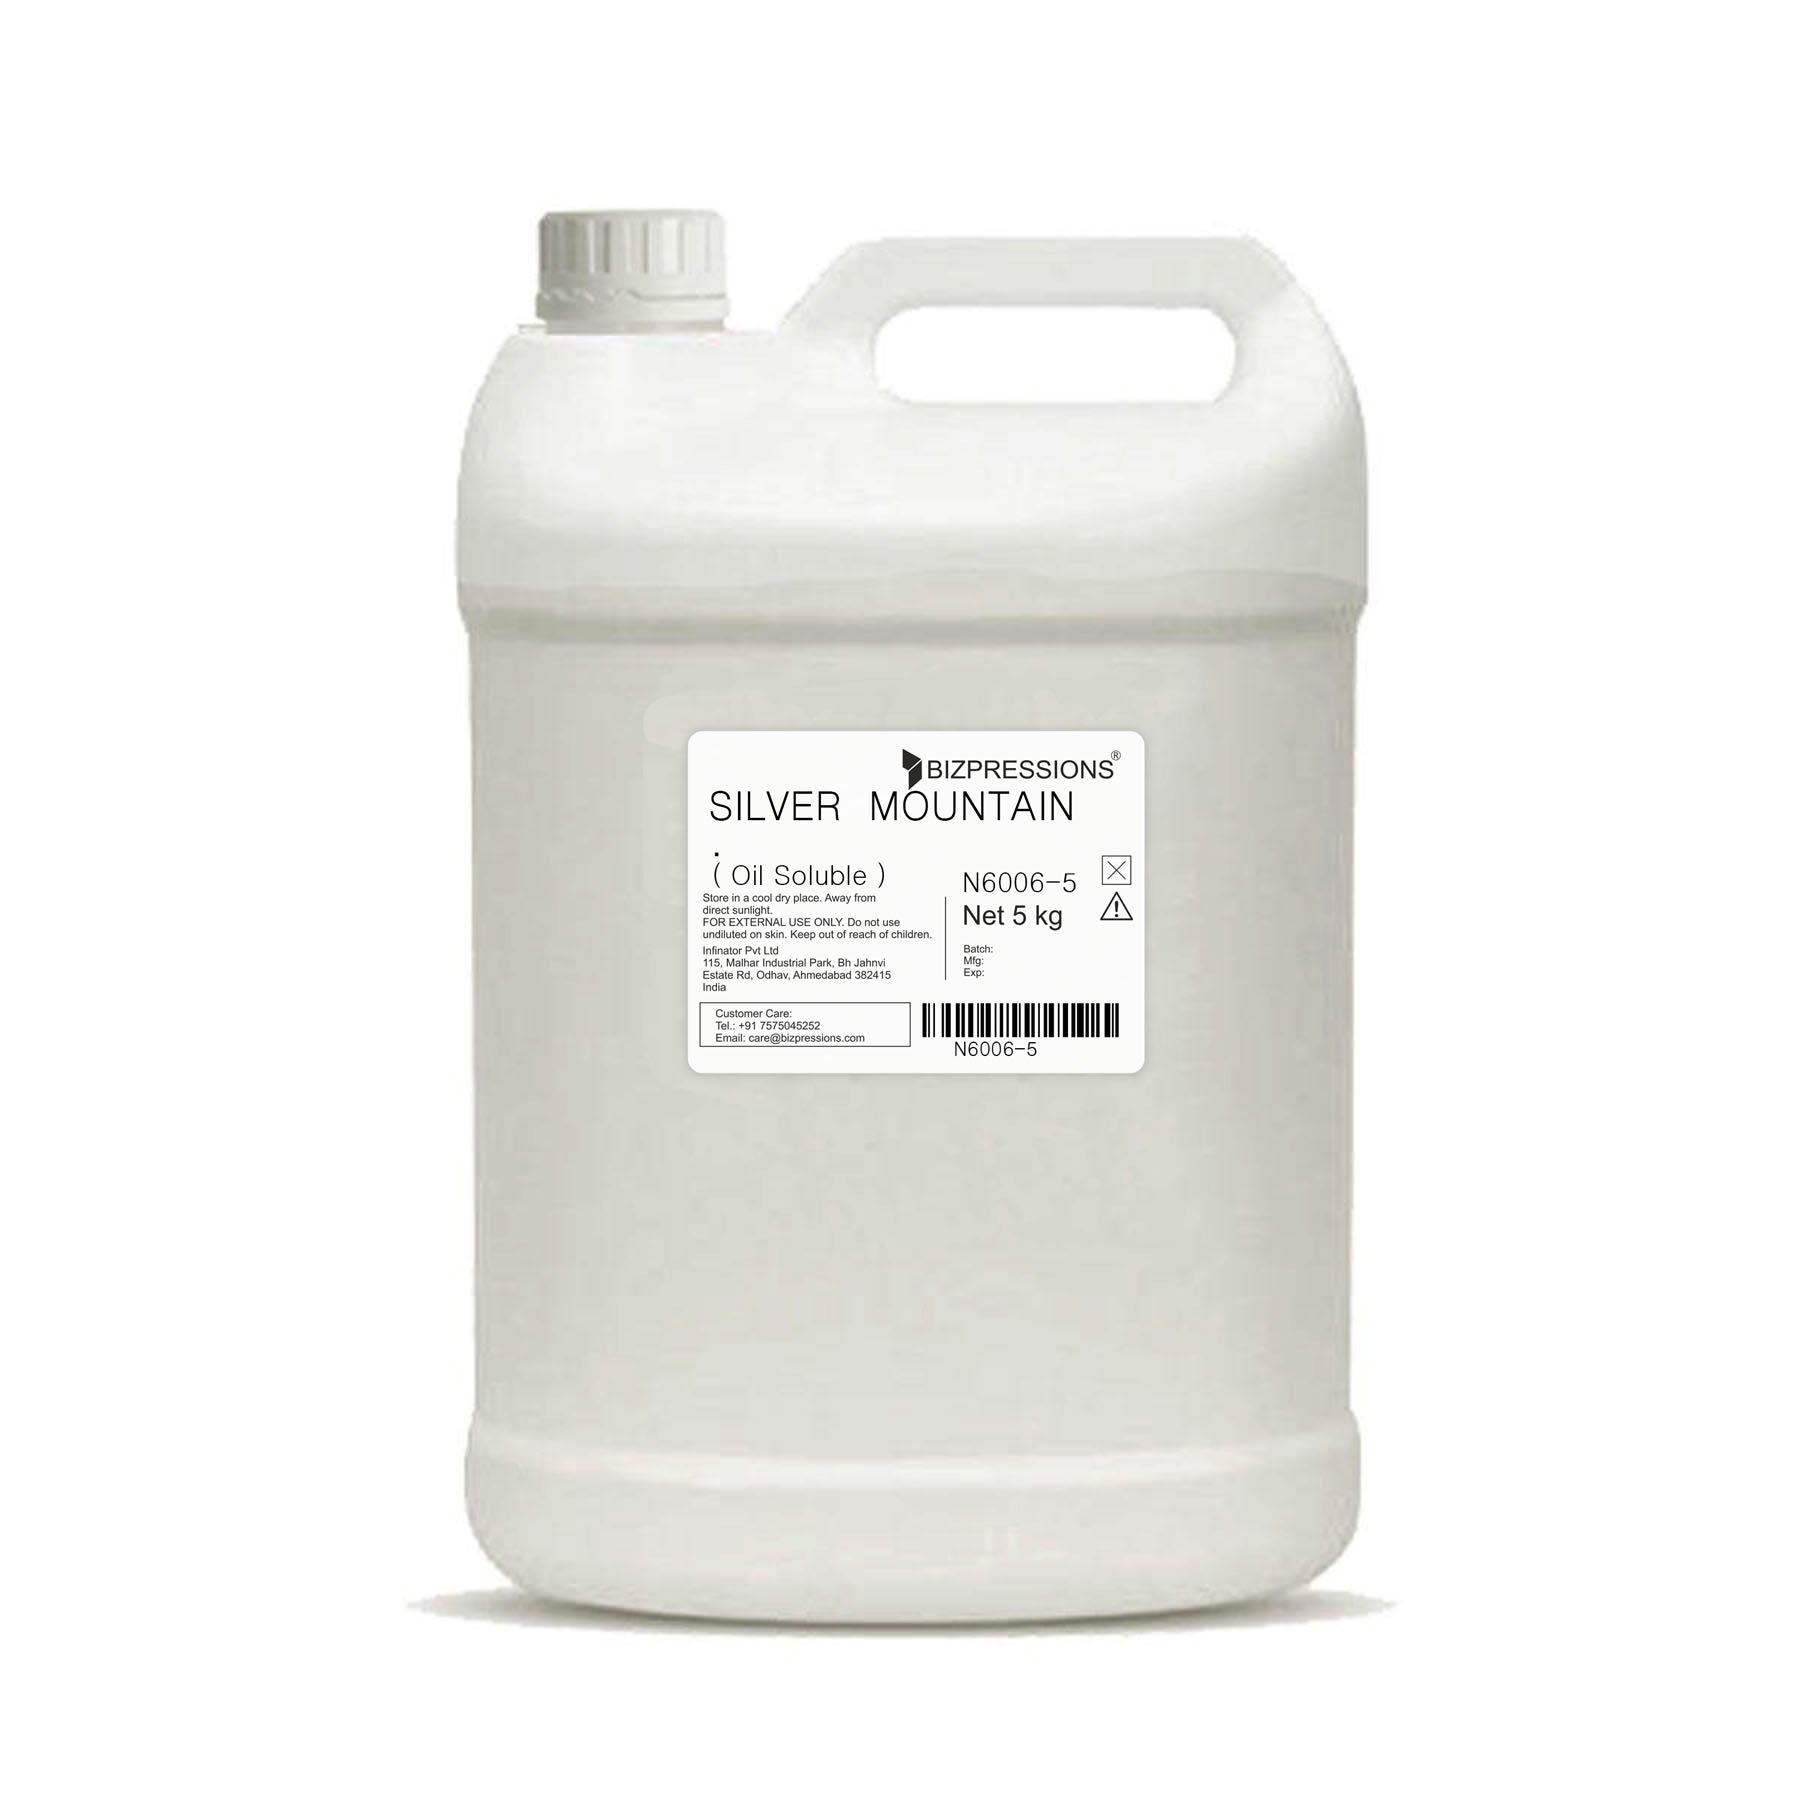 SILVER MOUNTAIN - Fragrance ( Oil Soluble ) - 5 kg